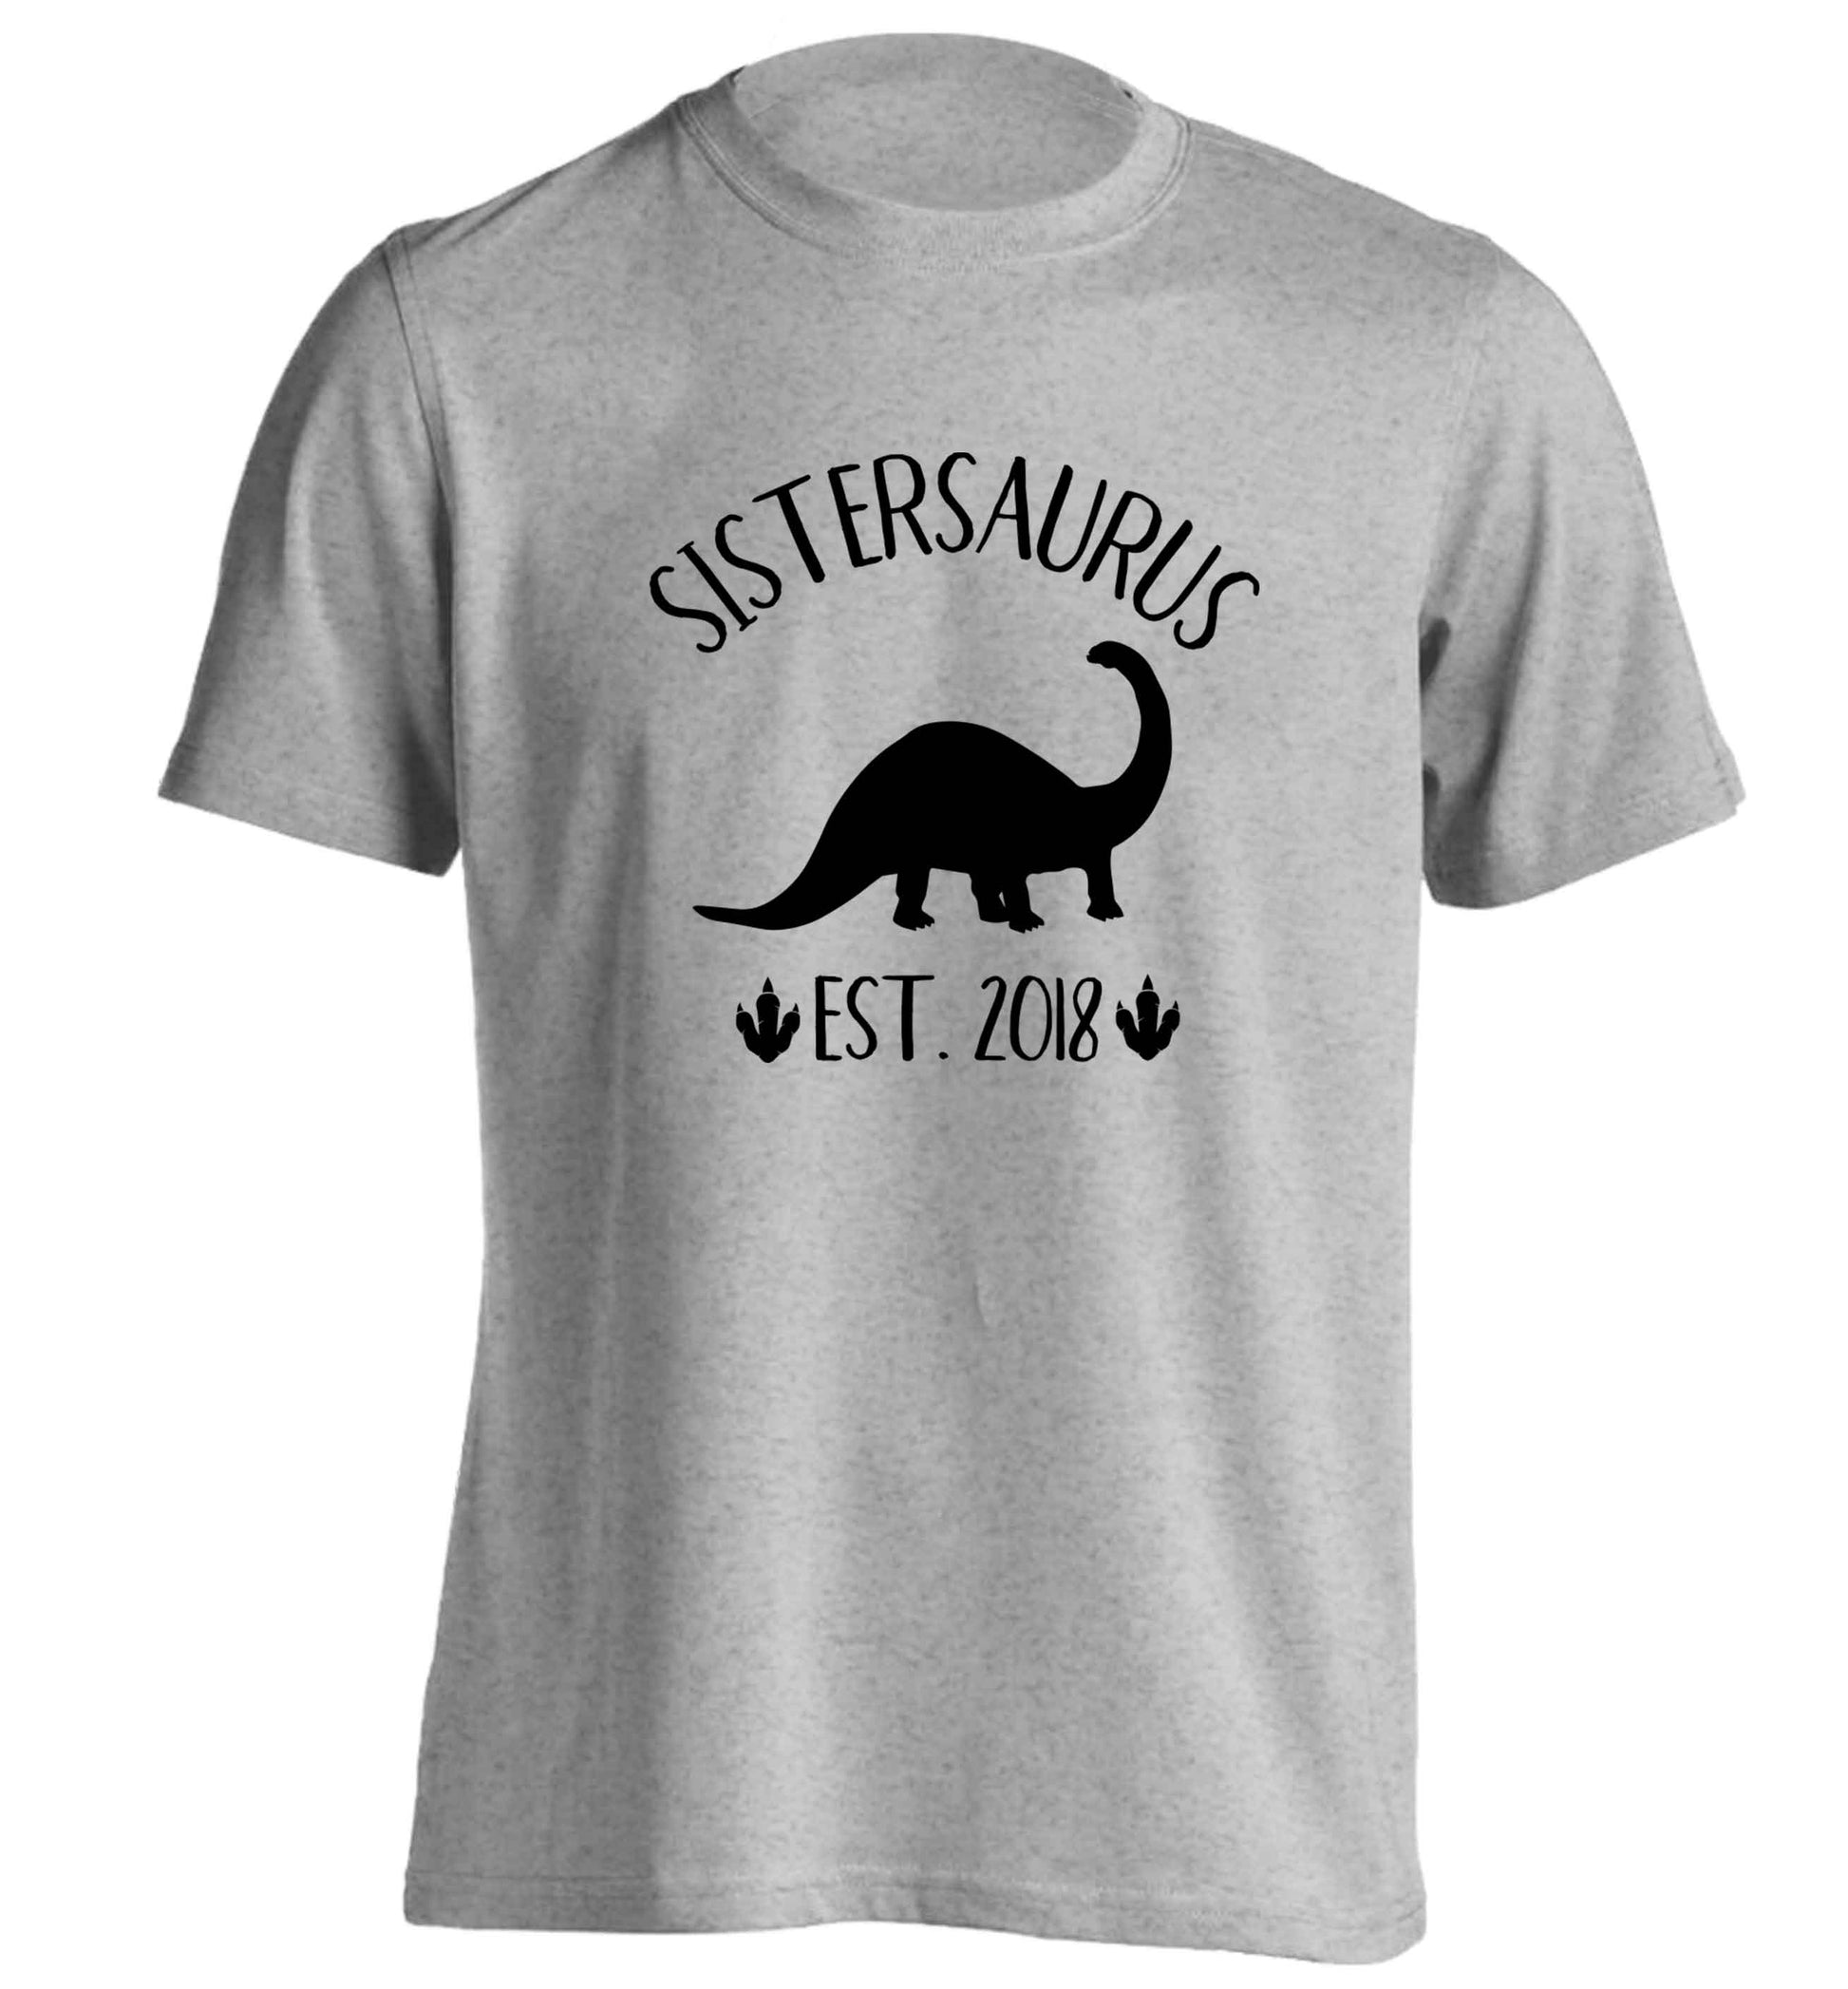 Personalised sistersaurus since (custom date) adults unisex grey Tshirt 2XL